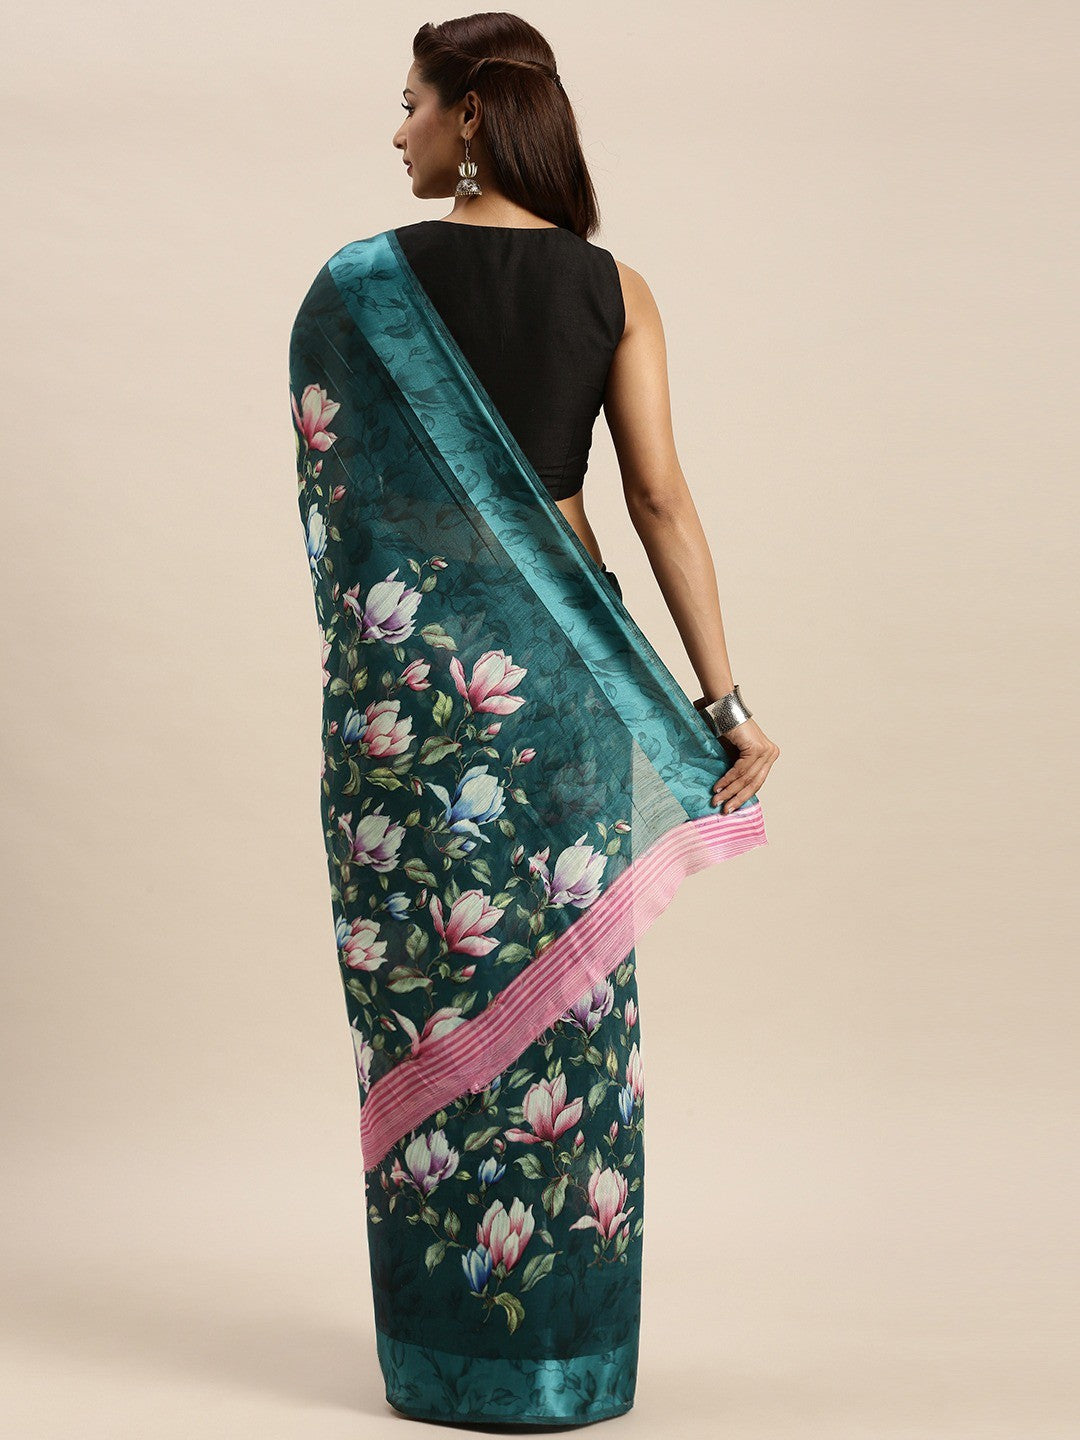 Women's Multicolor Art Silk Printed Saree - Ahika